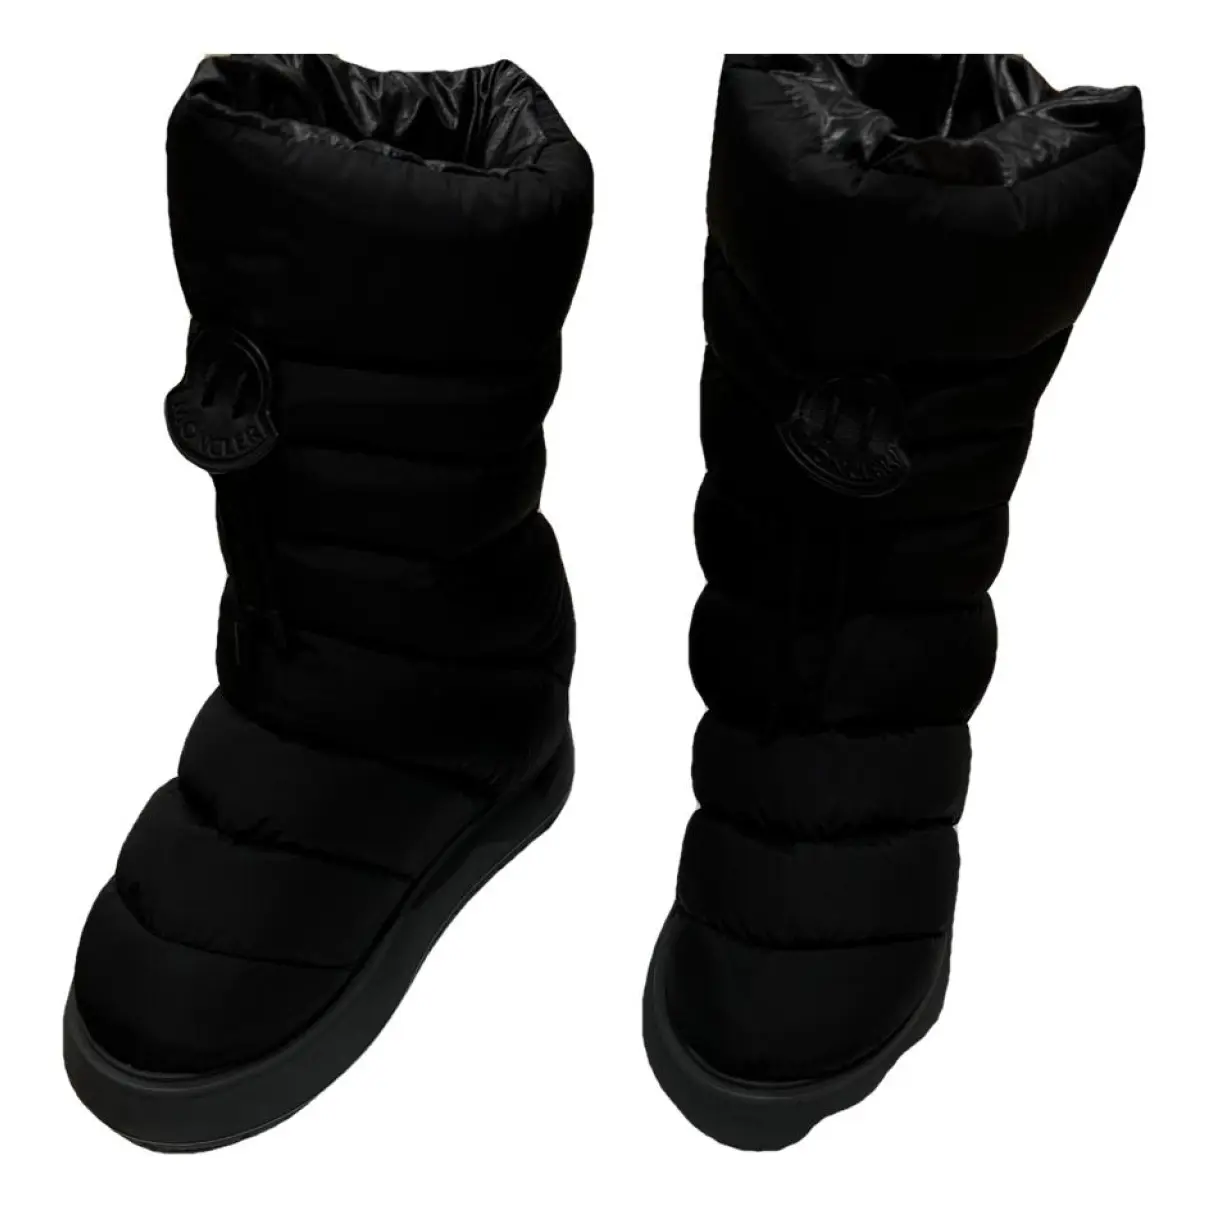 Cloth snow boots